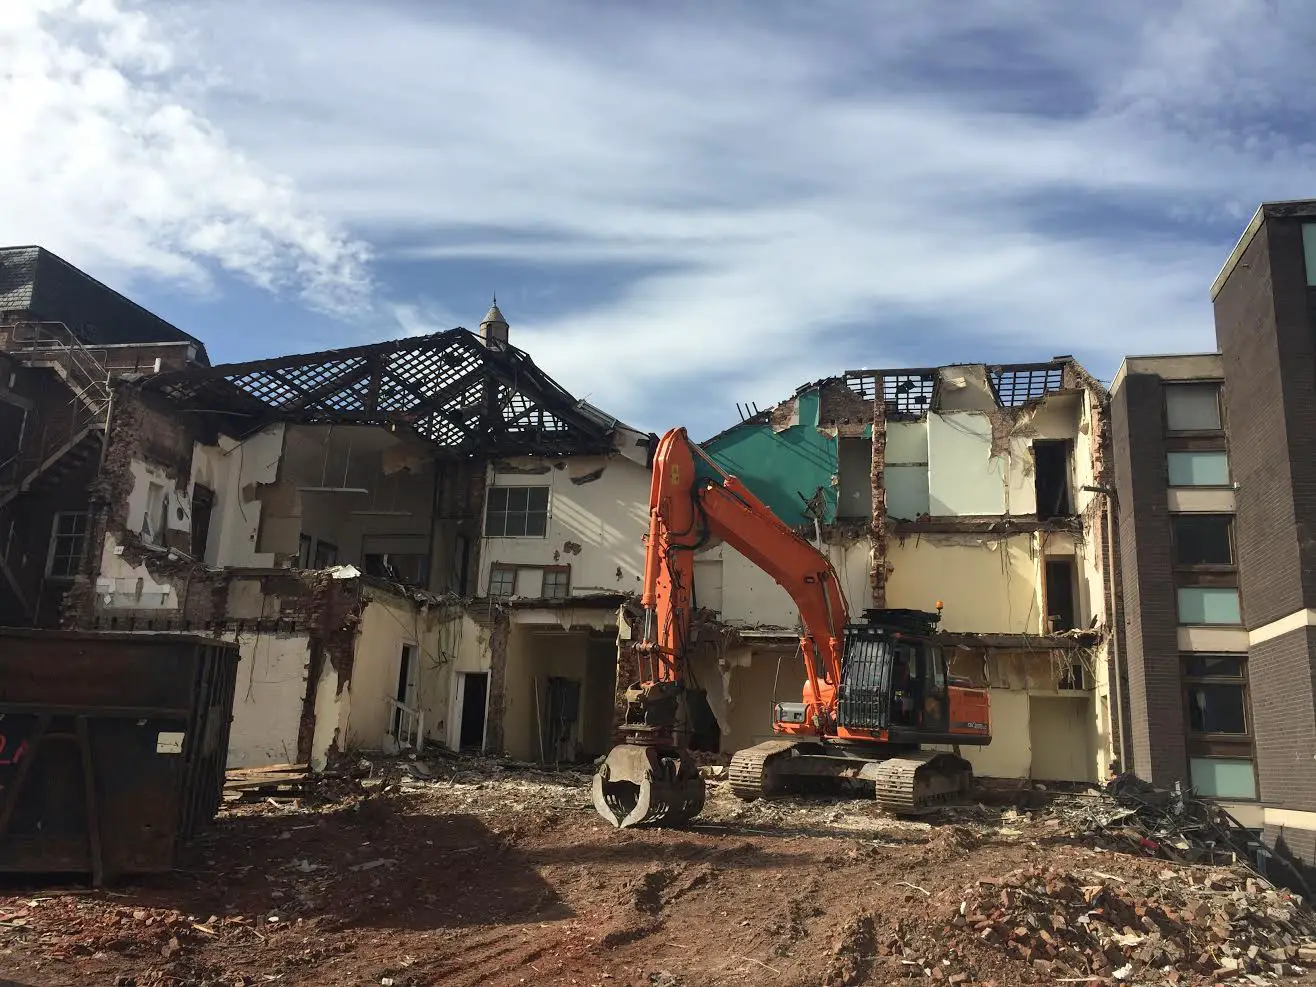 Demolition of the old hospital has begun